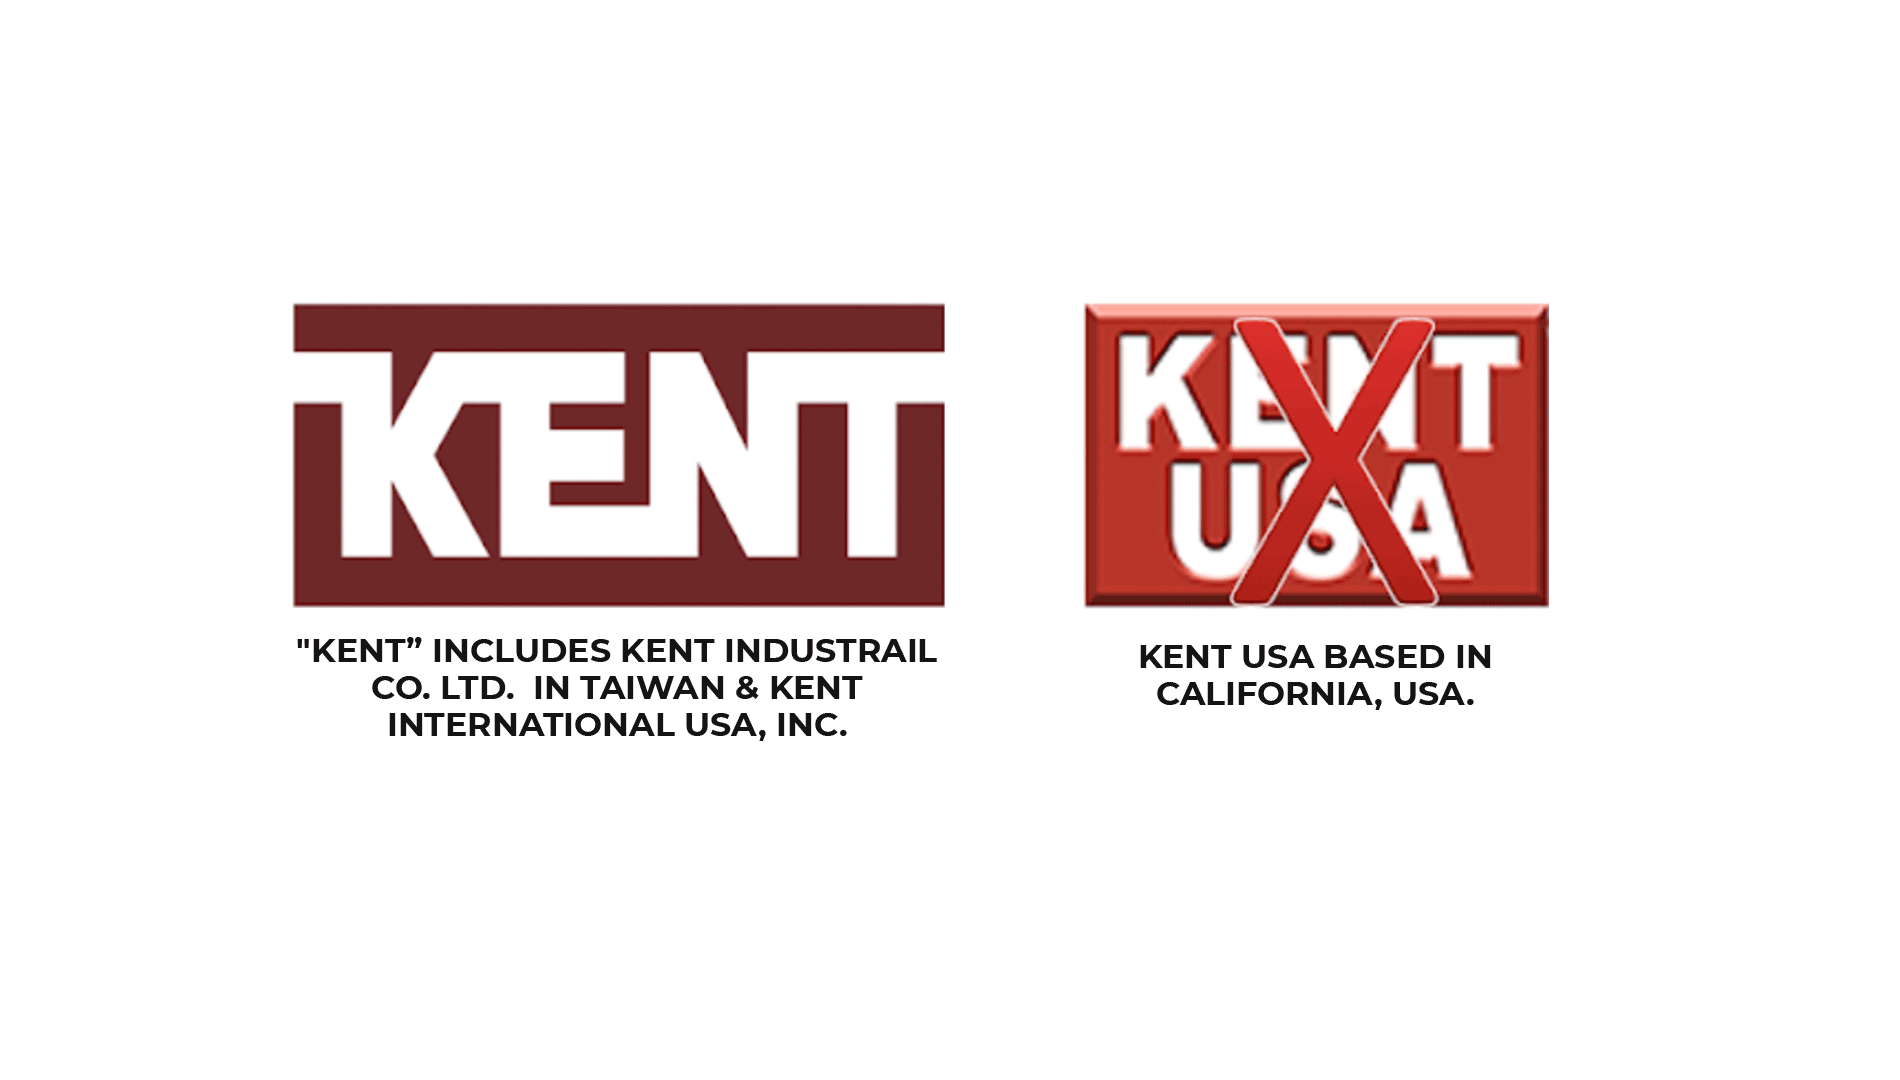 Why Kent